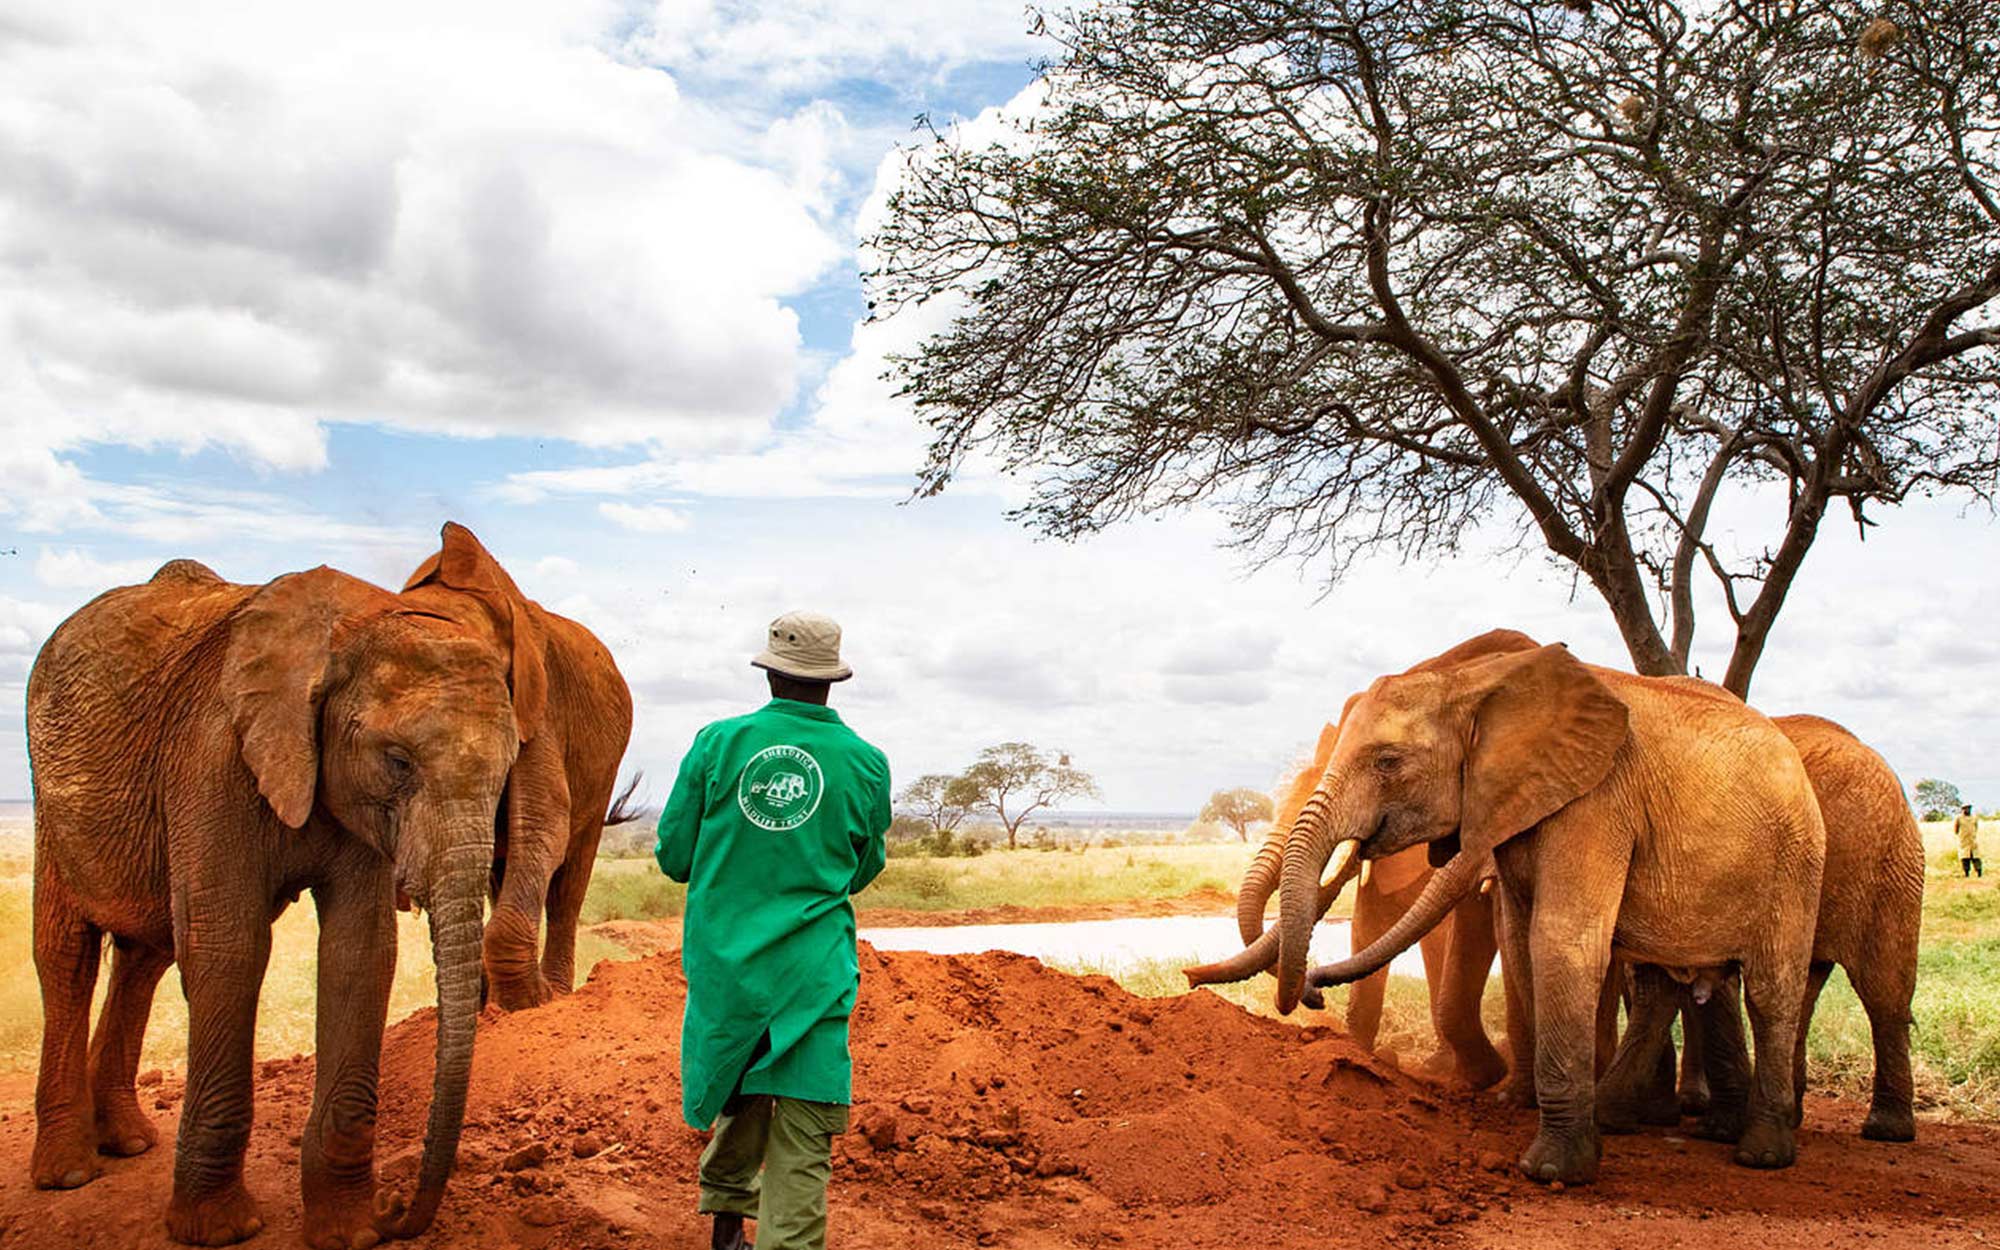 A human caretaker leads orphaned elephants on a walk at Sheldrick Wildlife Trust's Orphans' Project